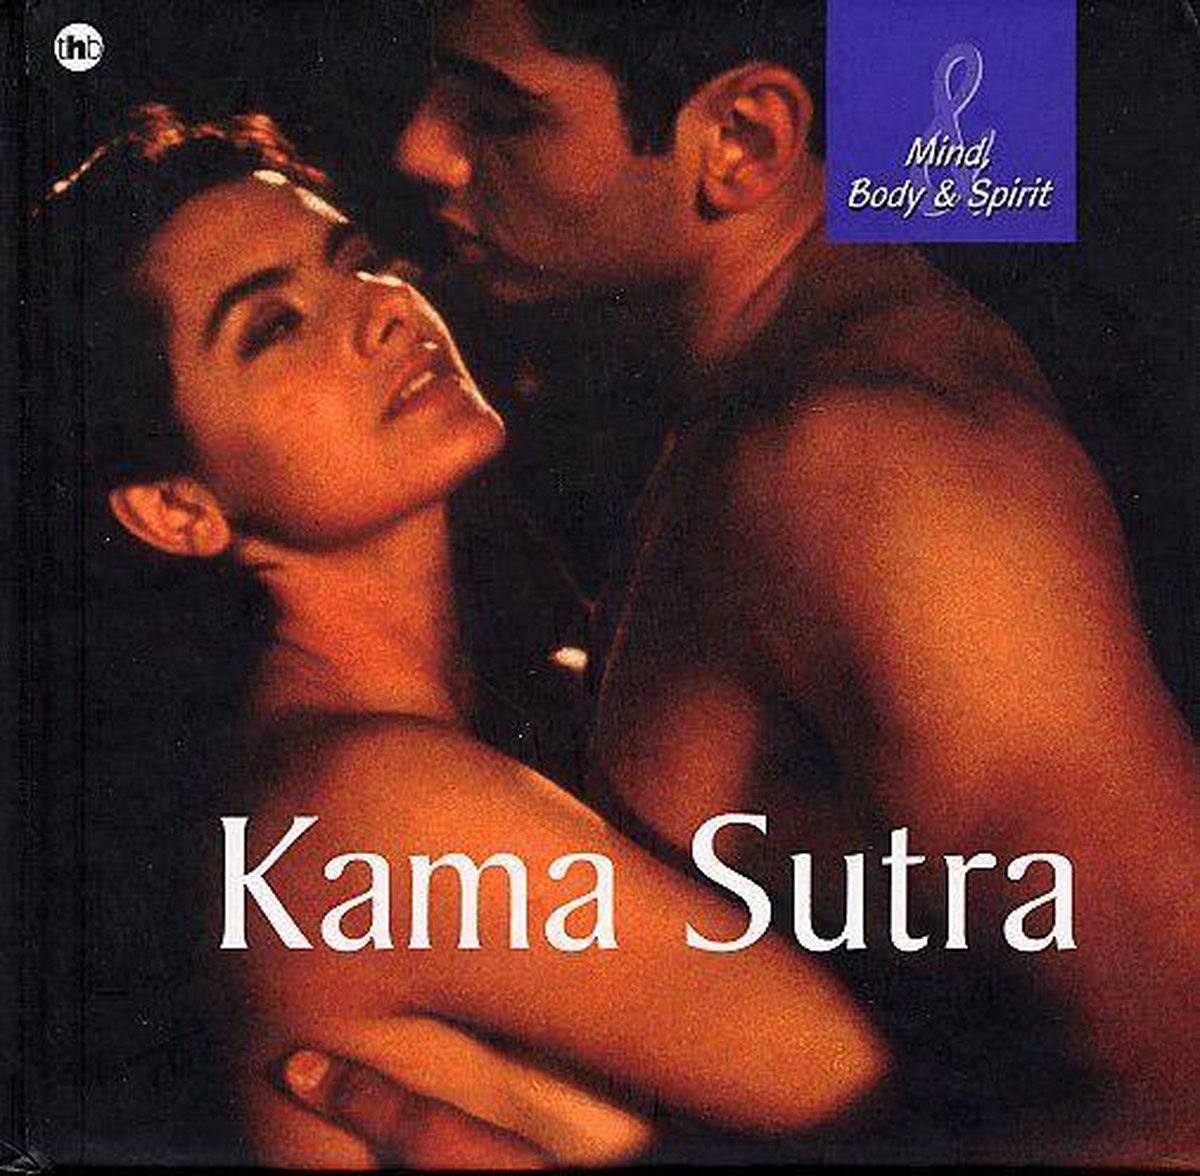 Kama Sutra / Mind, Body & Spirit